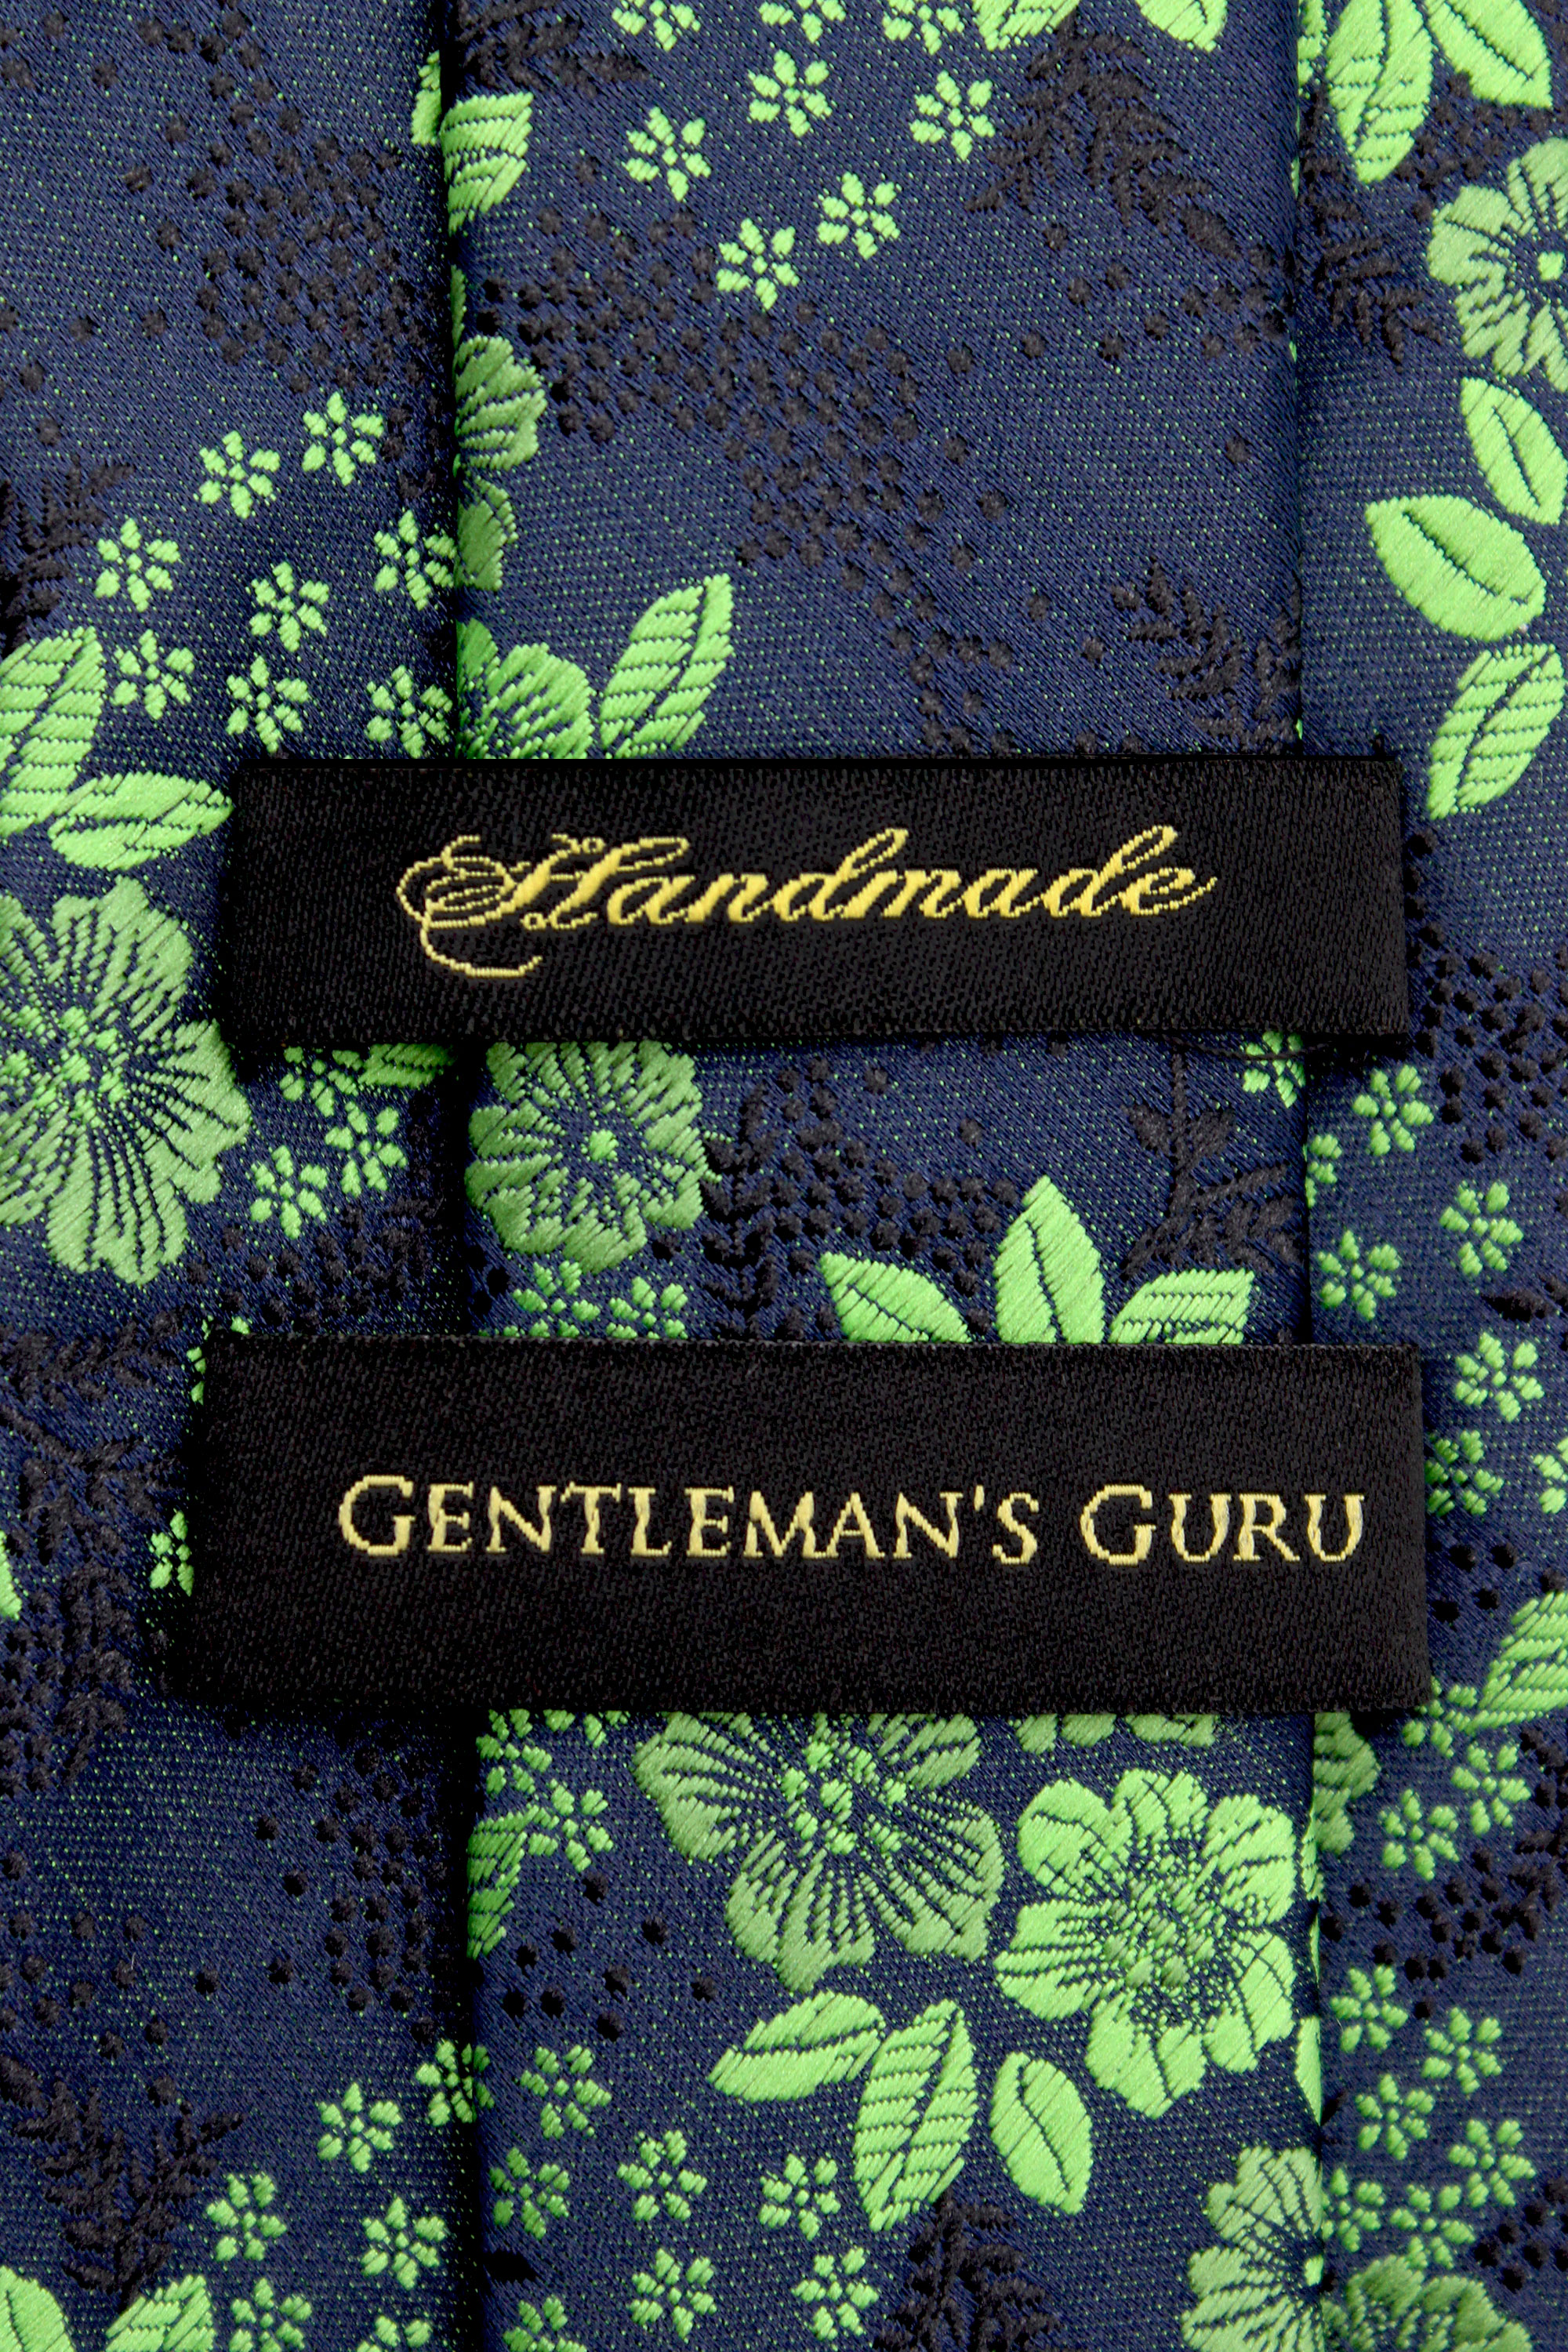 Green-Floral-Branded-Tie-from-Gentlemansguru.com